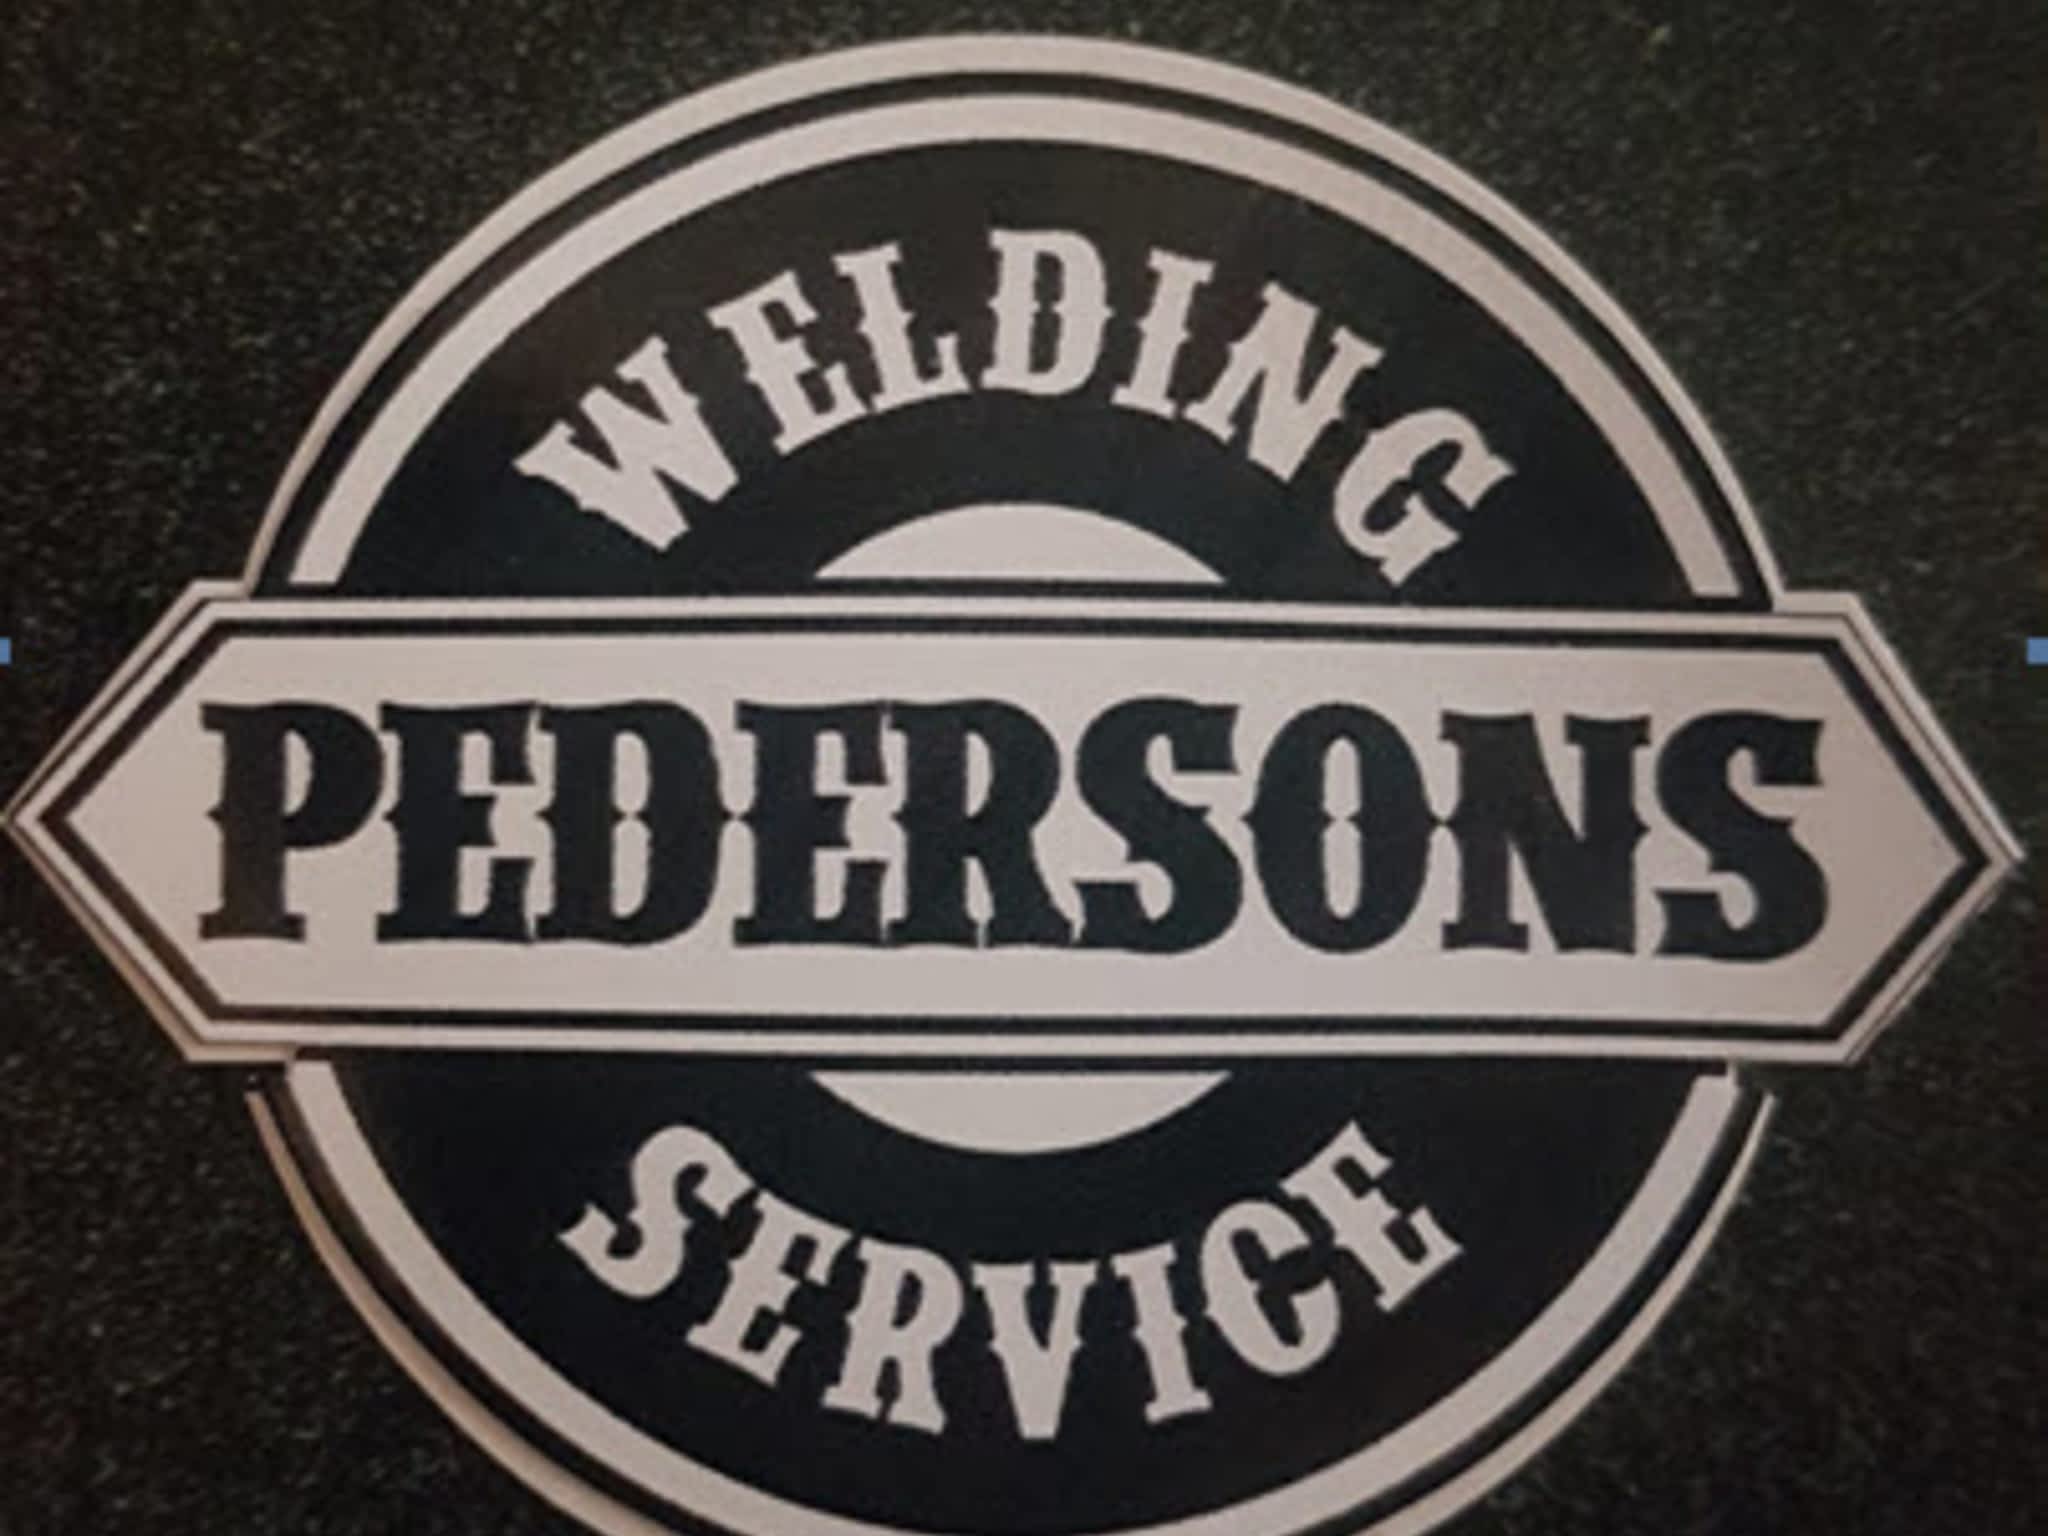 photo Pedersons Welding Service